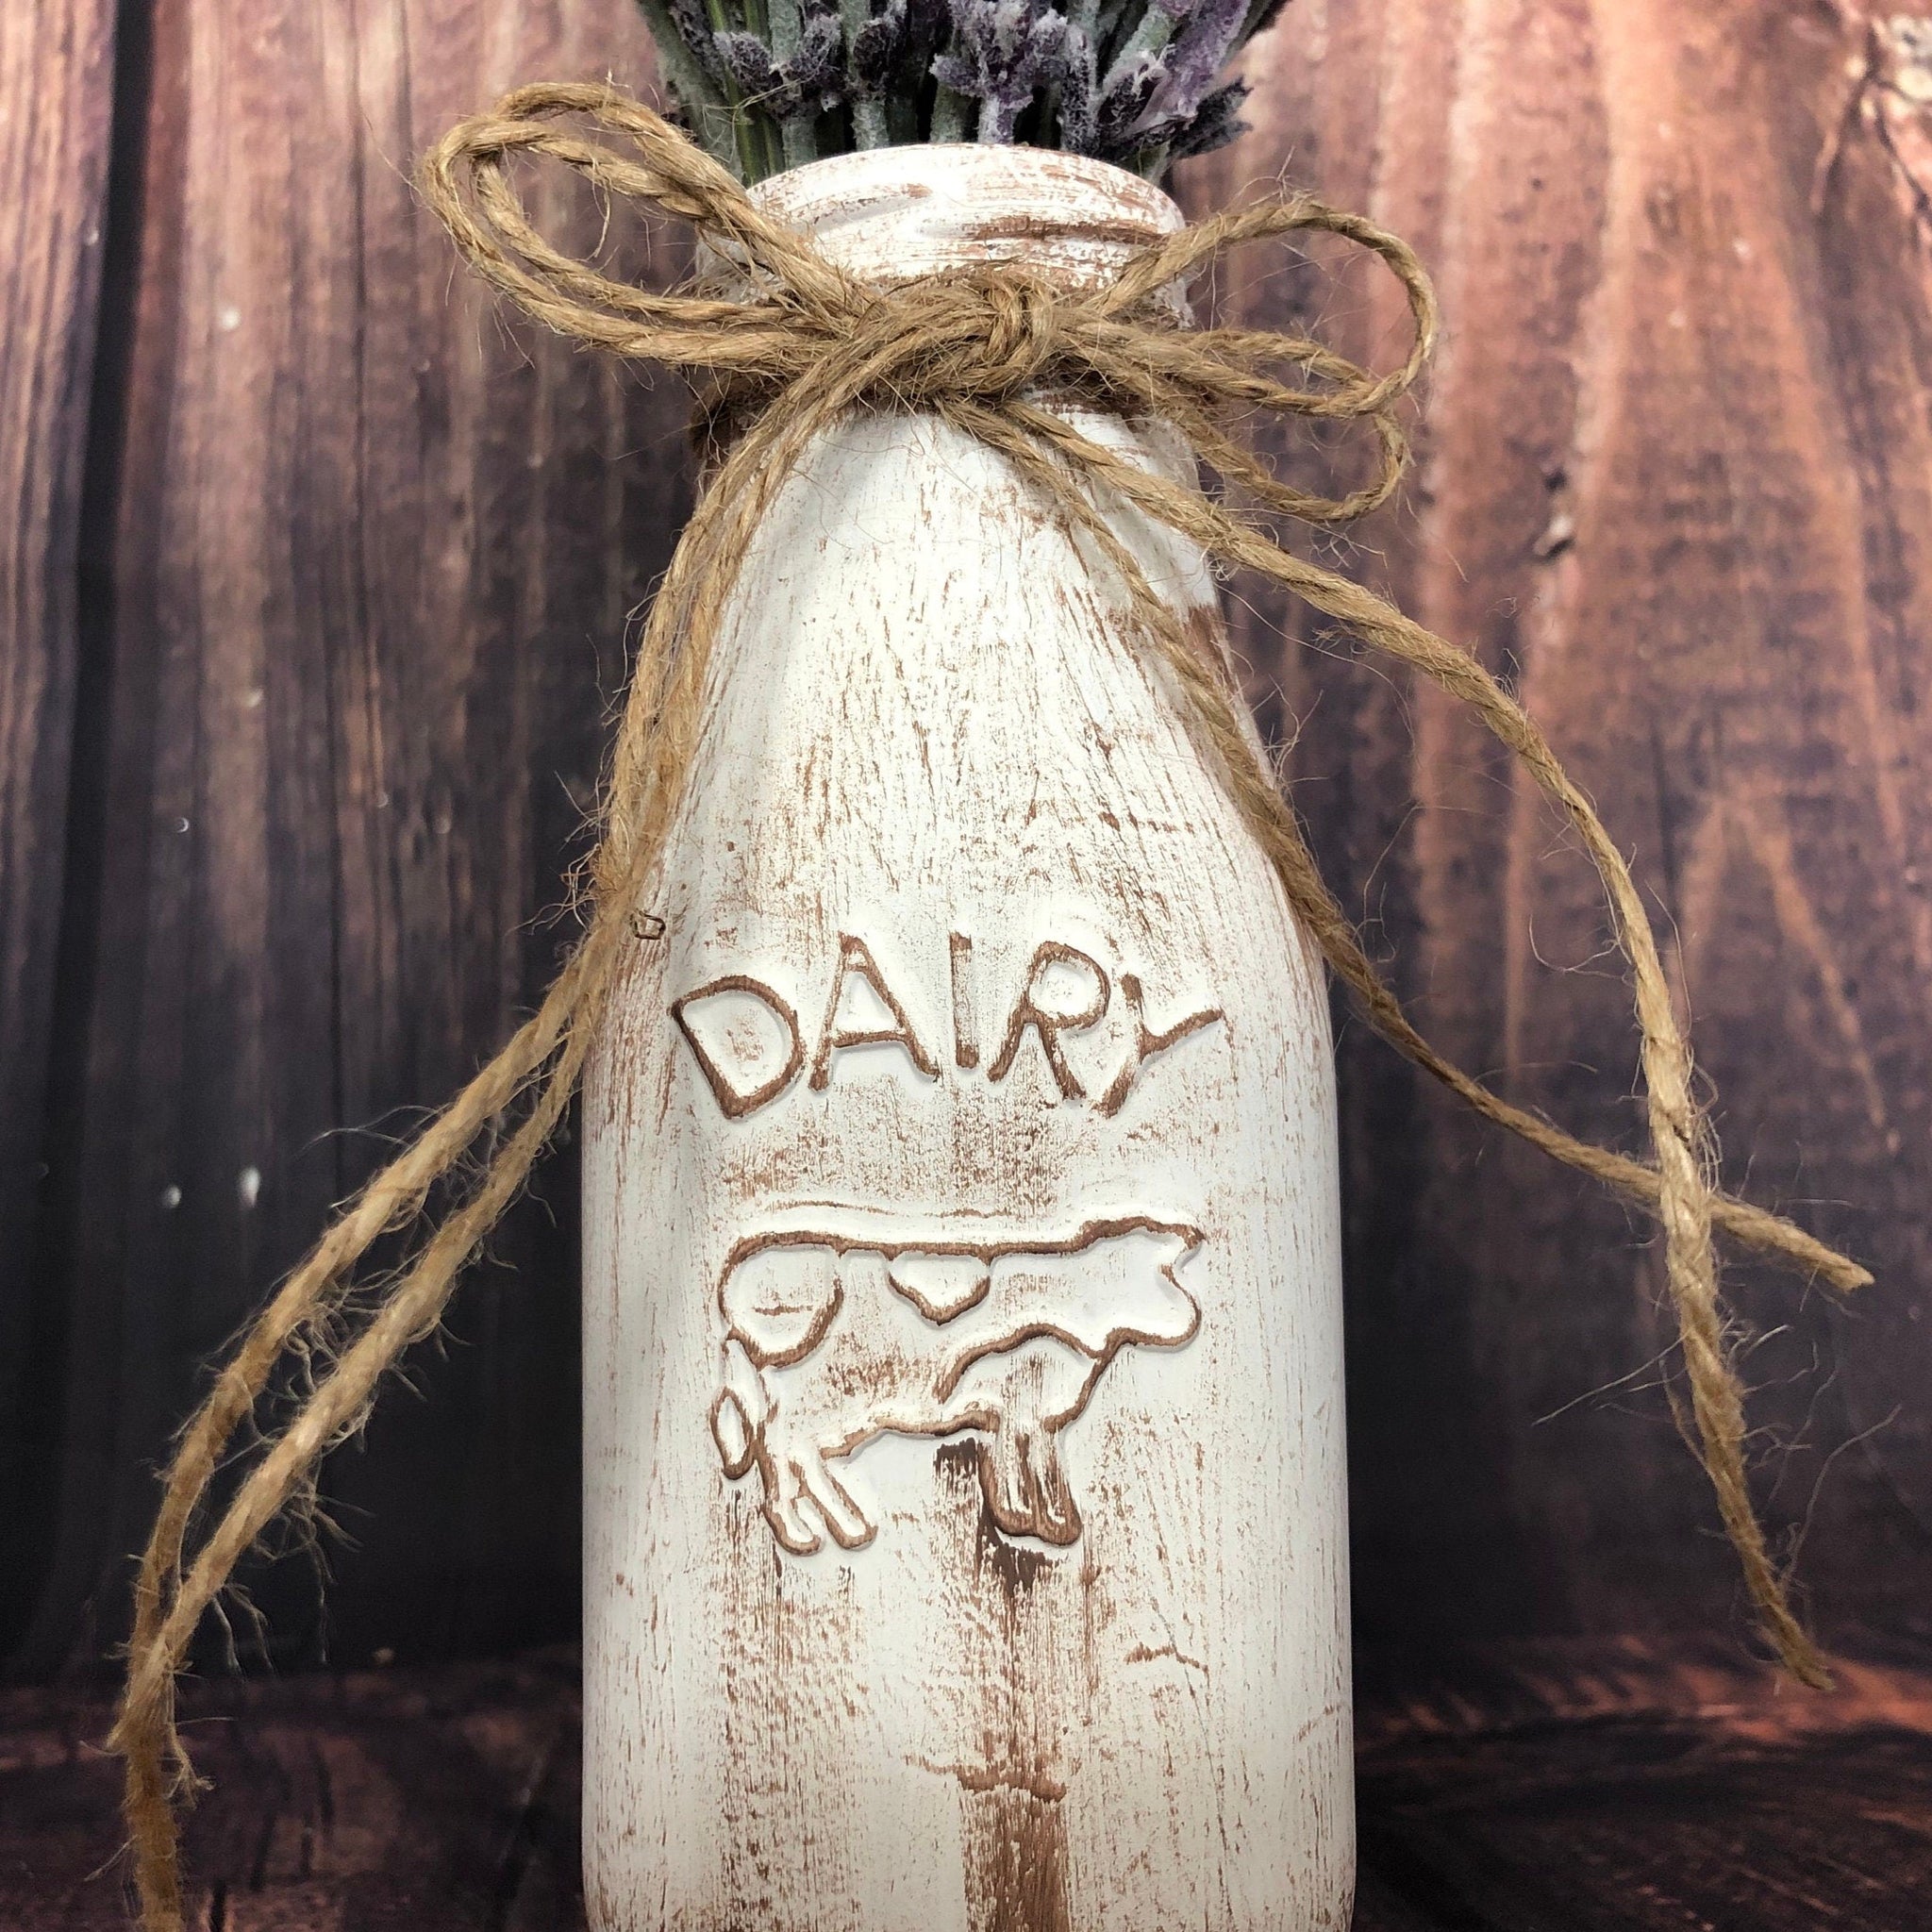 Milk bottle vase with lavender  White farmhouse vase for kitchen